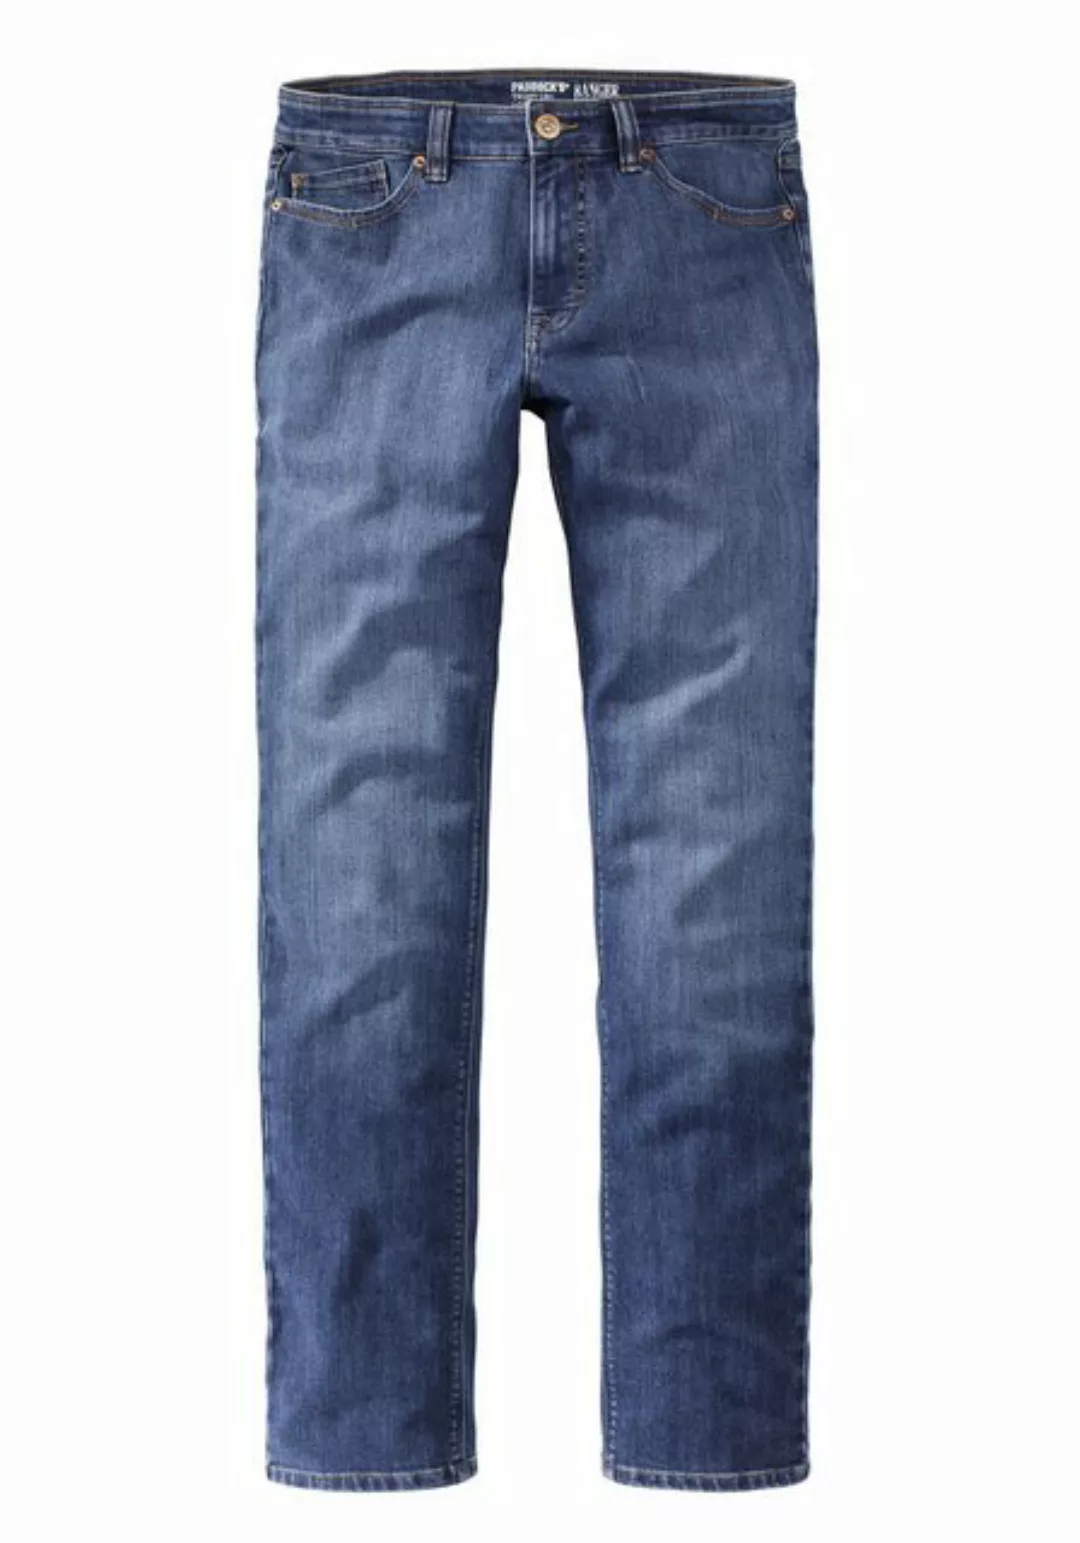 Paddock's 5-Pocket-Jeans PADDOCKS RANGER PIPE mid blue used washed 80139 58 günstig online kaufen